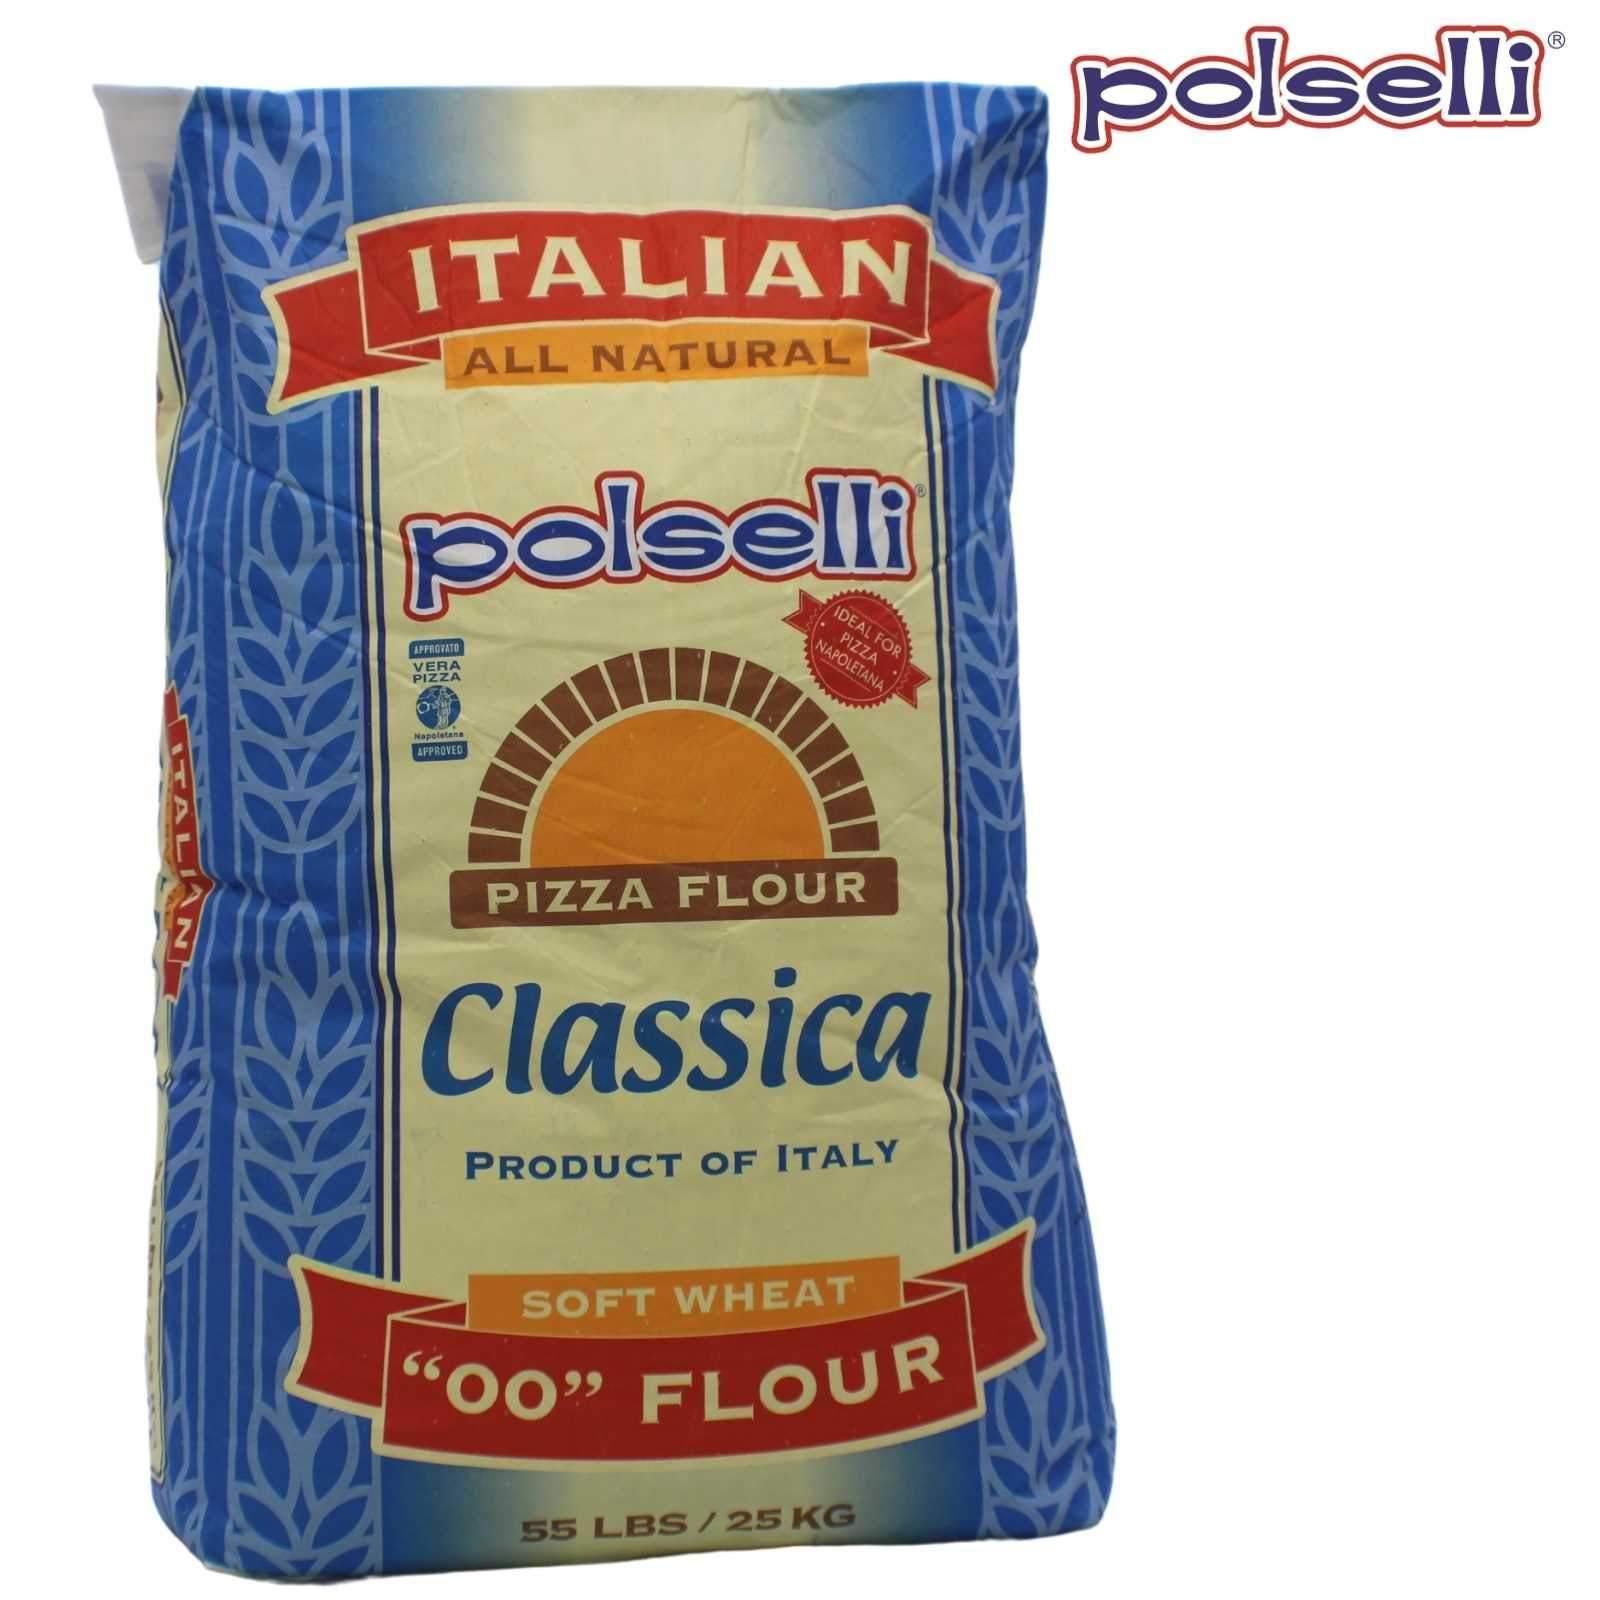 Polselli 00 Pizza Flour Classica Real Italian Pizza Flour ALL NATURAL (55lbs) Wholesale Italian Foods